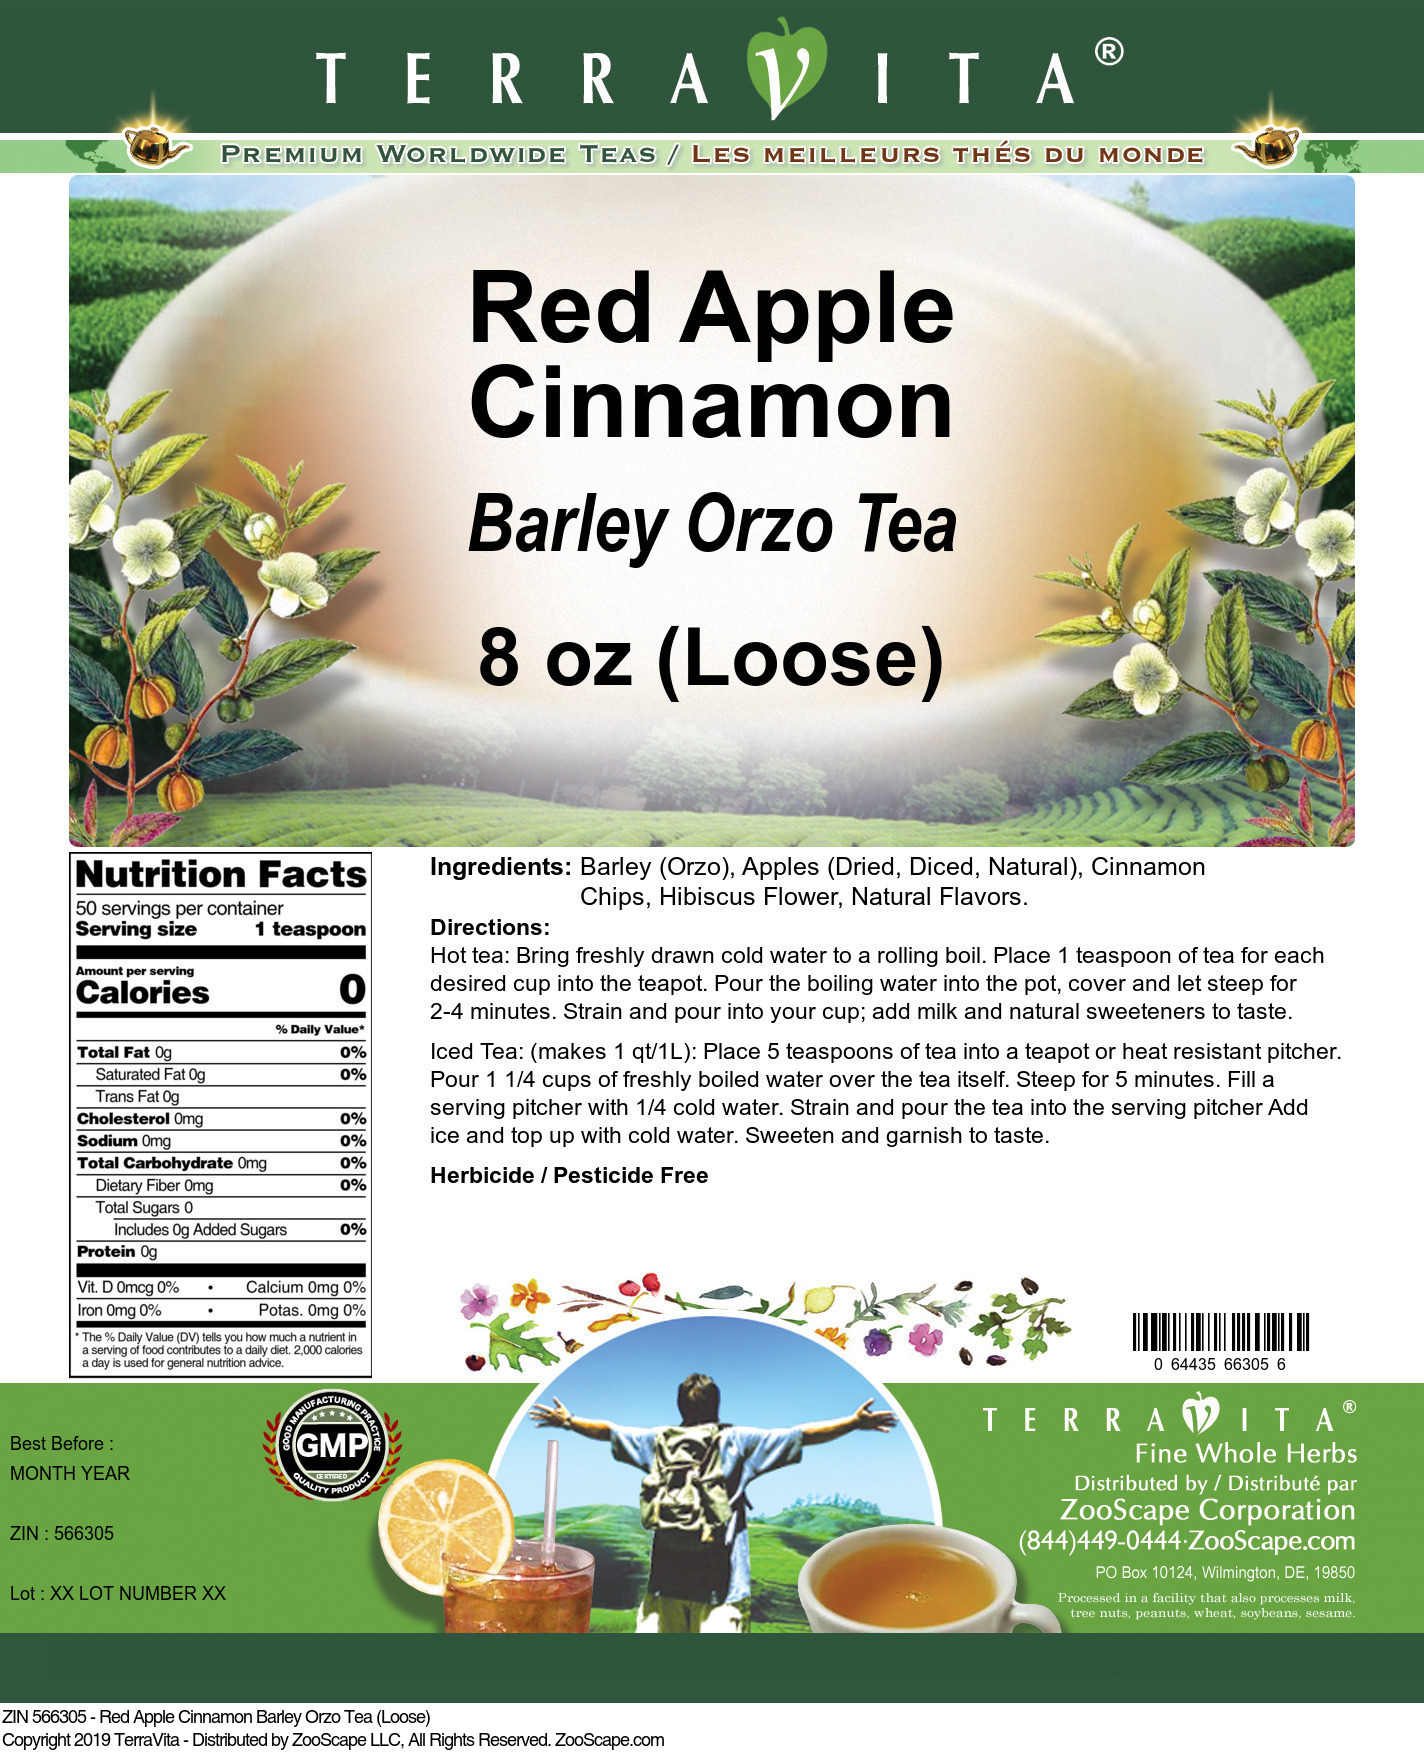 Red Apple Cinnamon Barley Orzo Tea (Loose) - Label